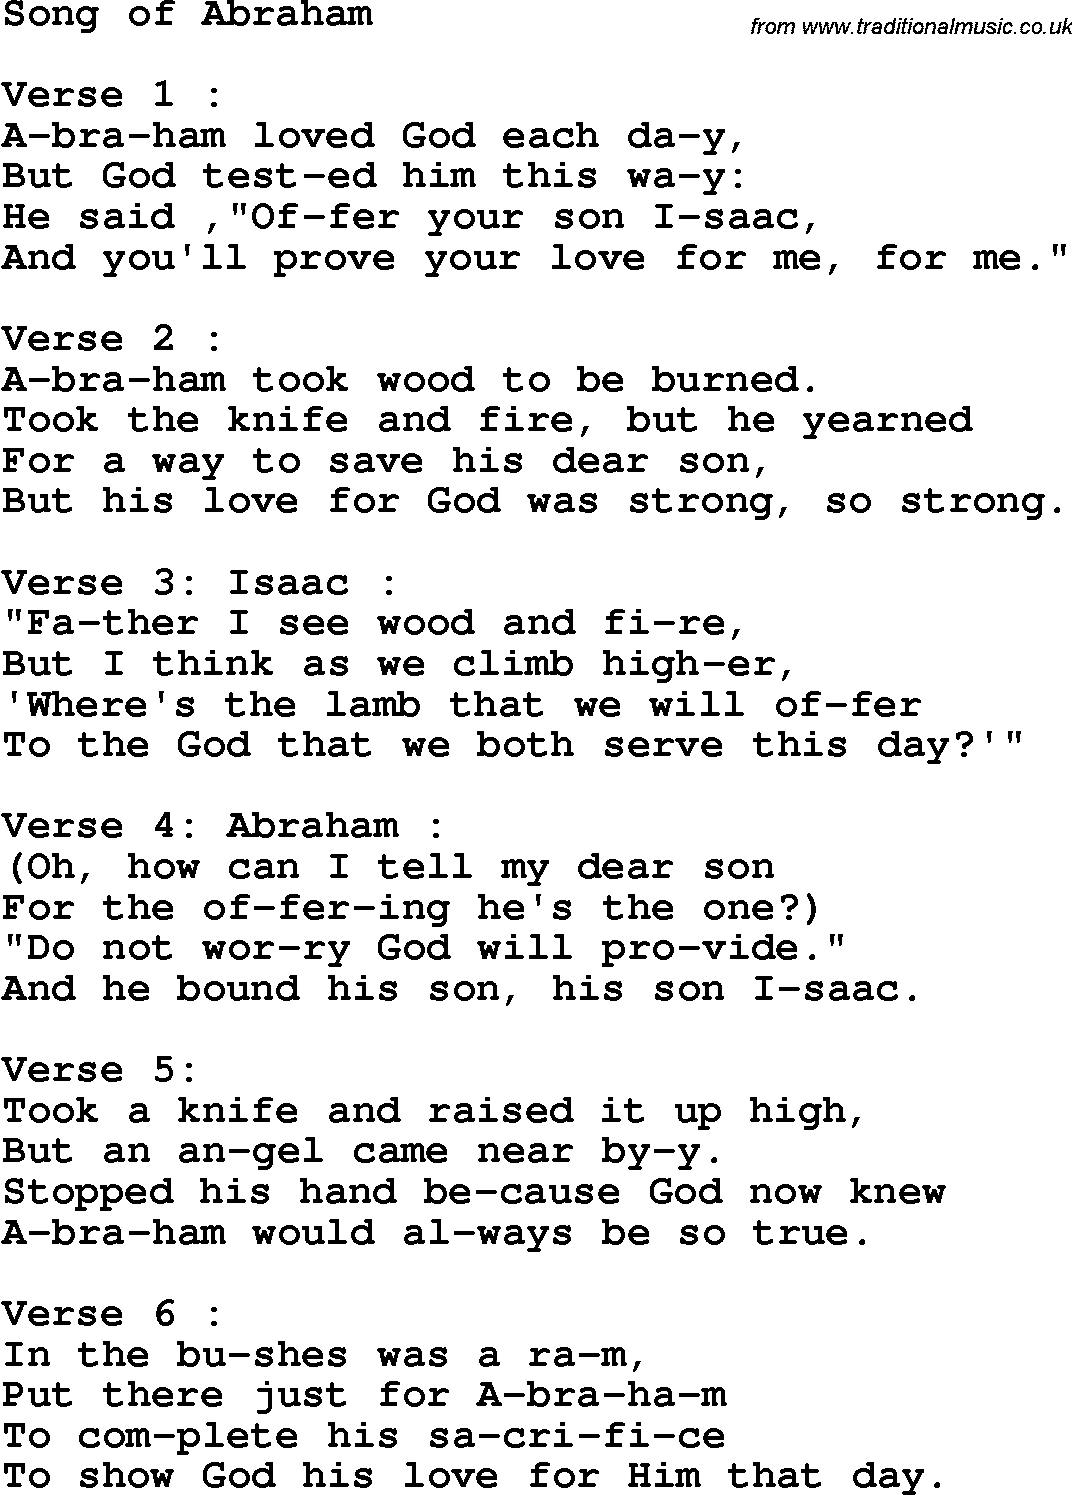 Christian Chlidrens Song Song Of Abraham Lyrics